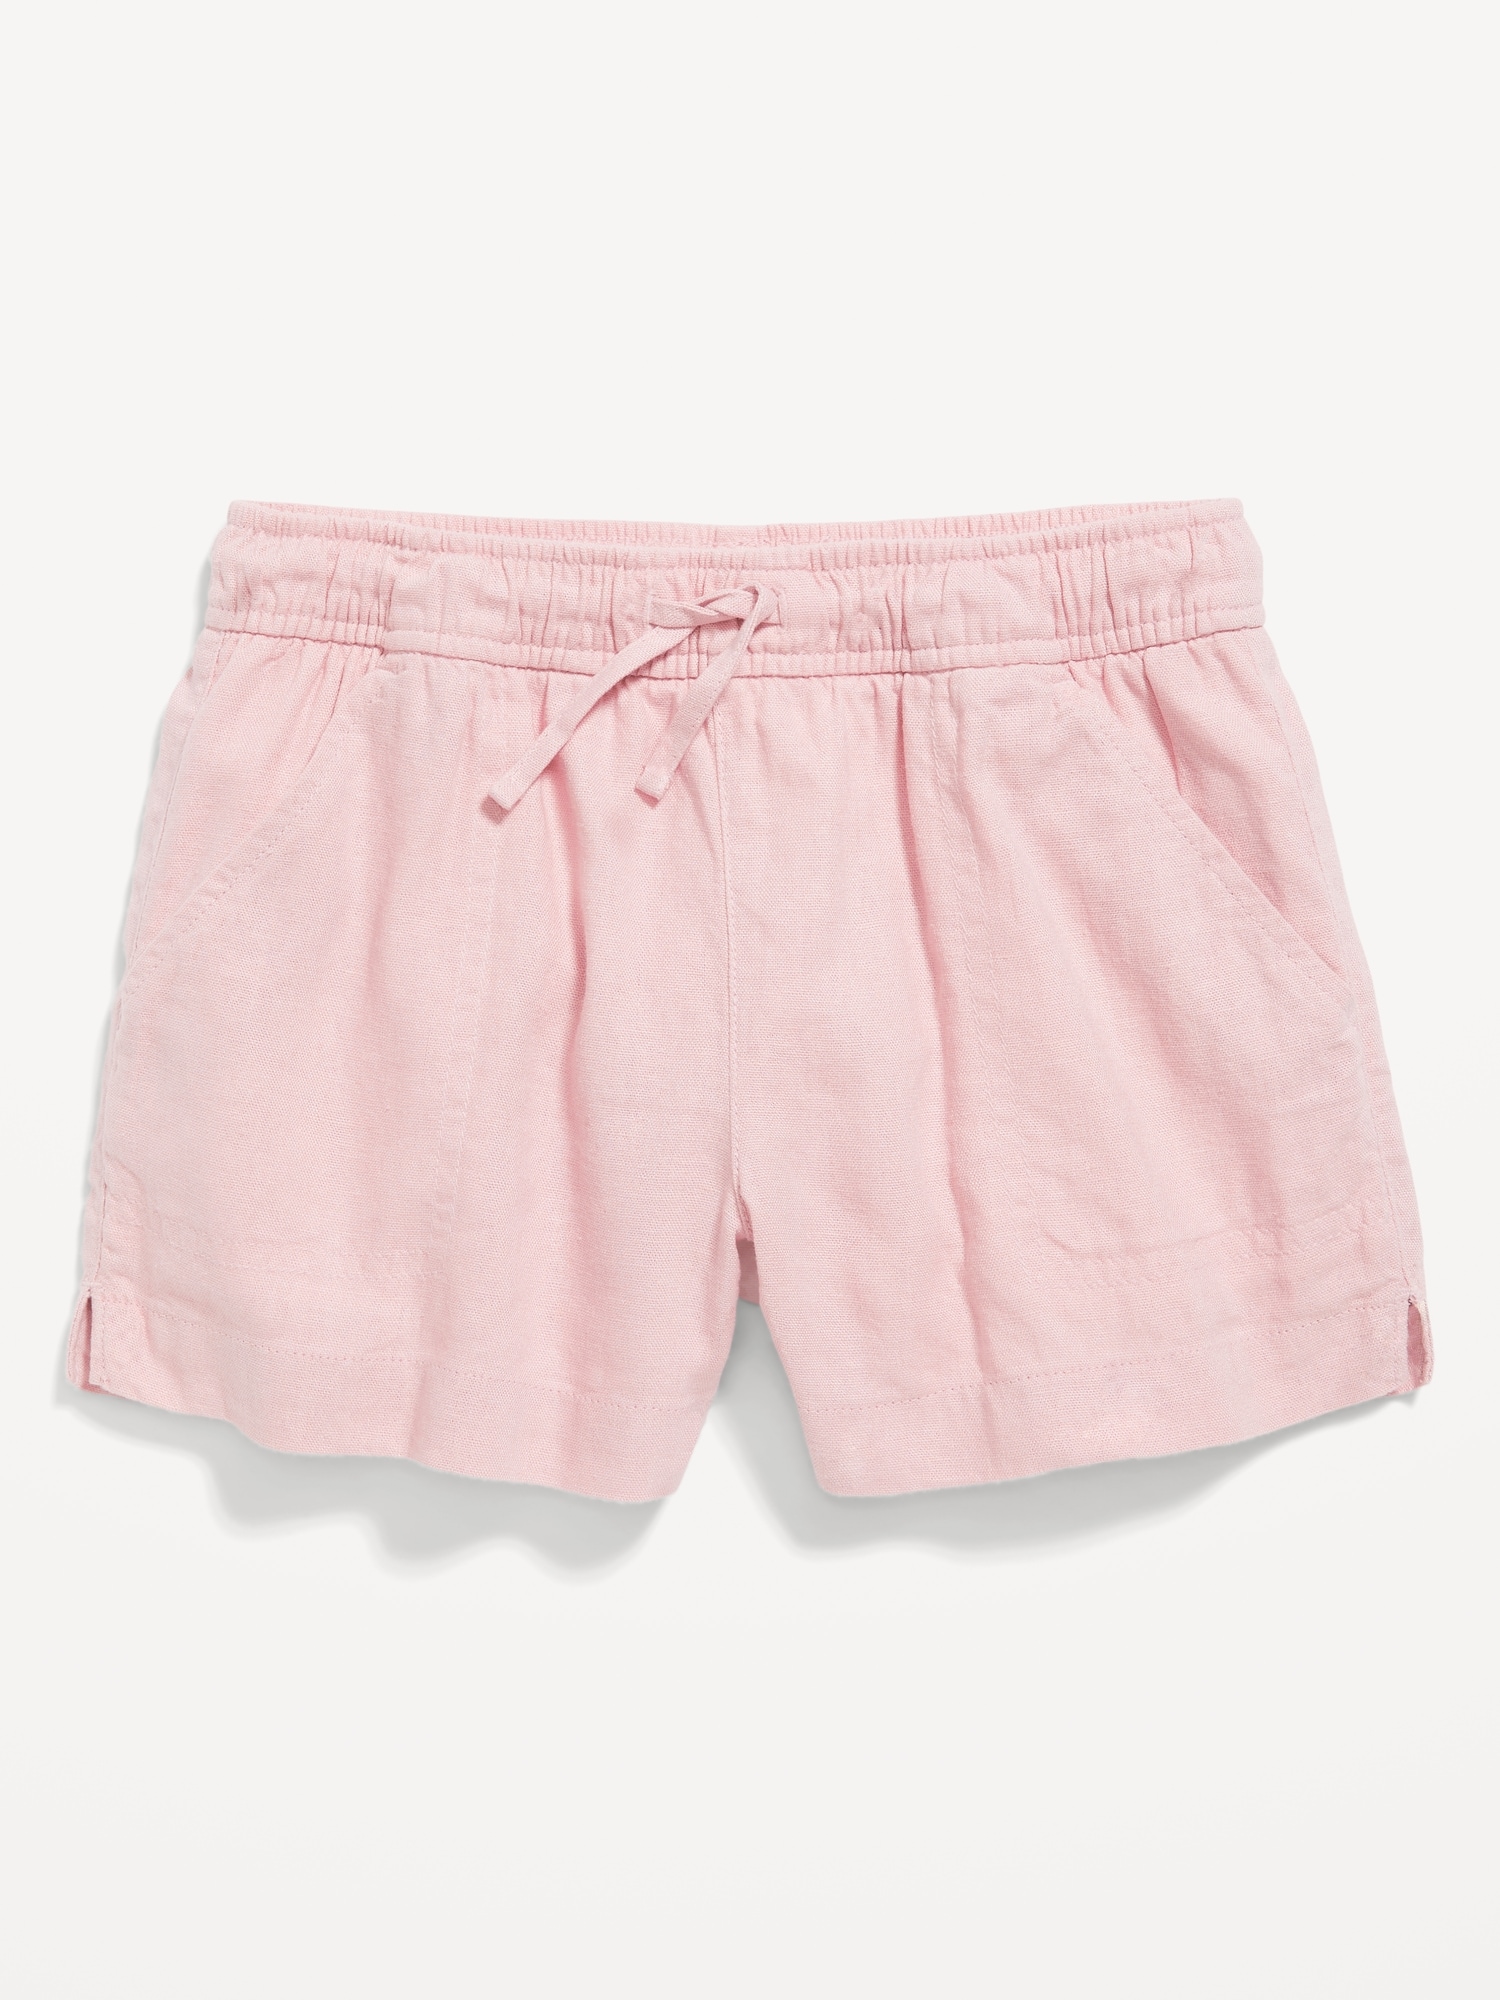 Old Navy Linen-Blend Drawstring Shorts for Girls pink. 1